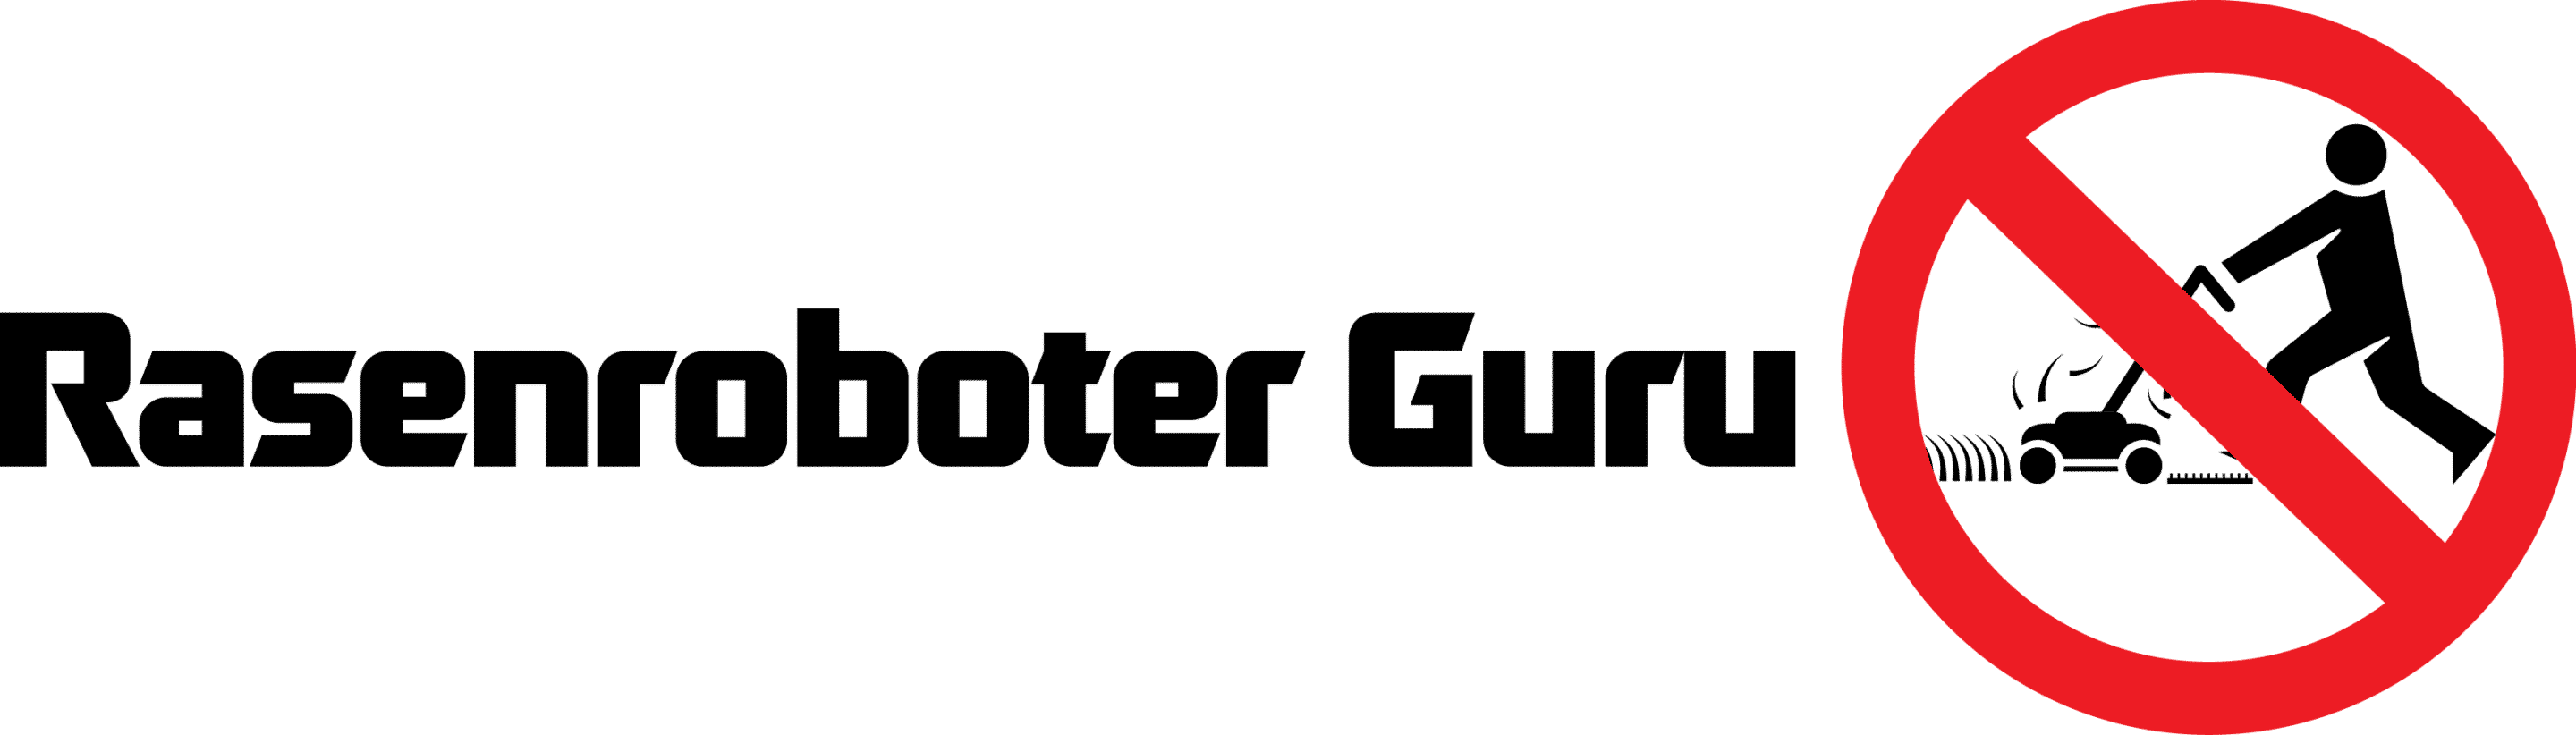 Rasenroboter Guru: Ihr Rasenroboterprofi in Leibnitz und Graz